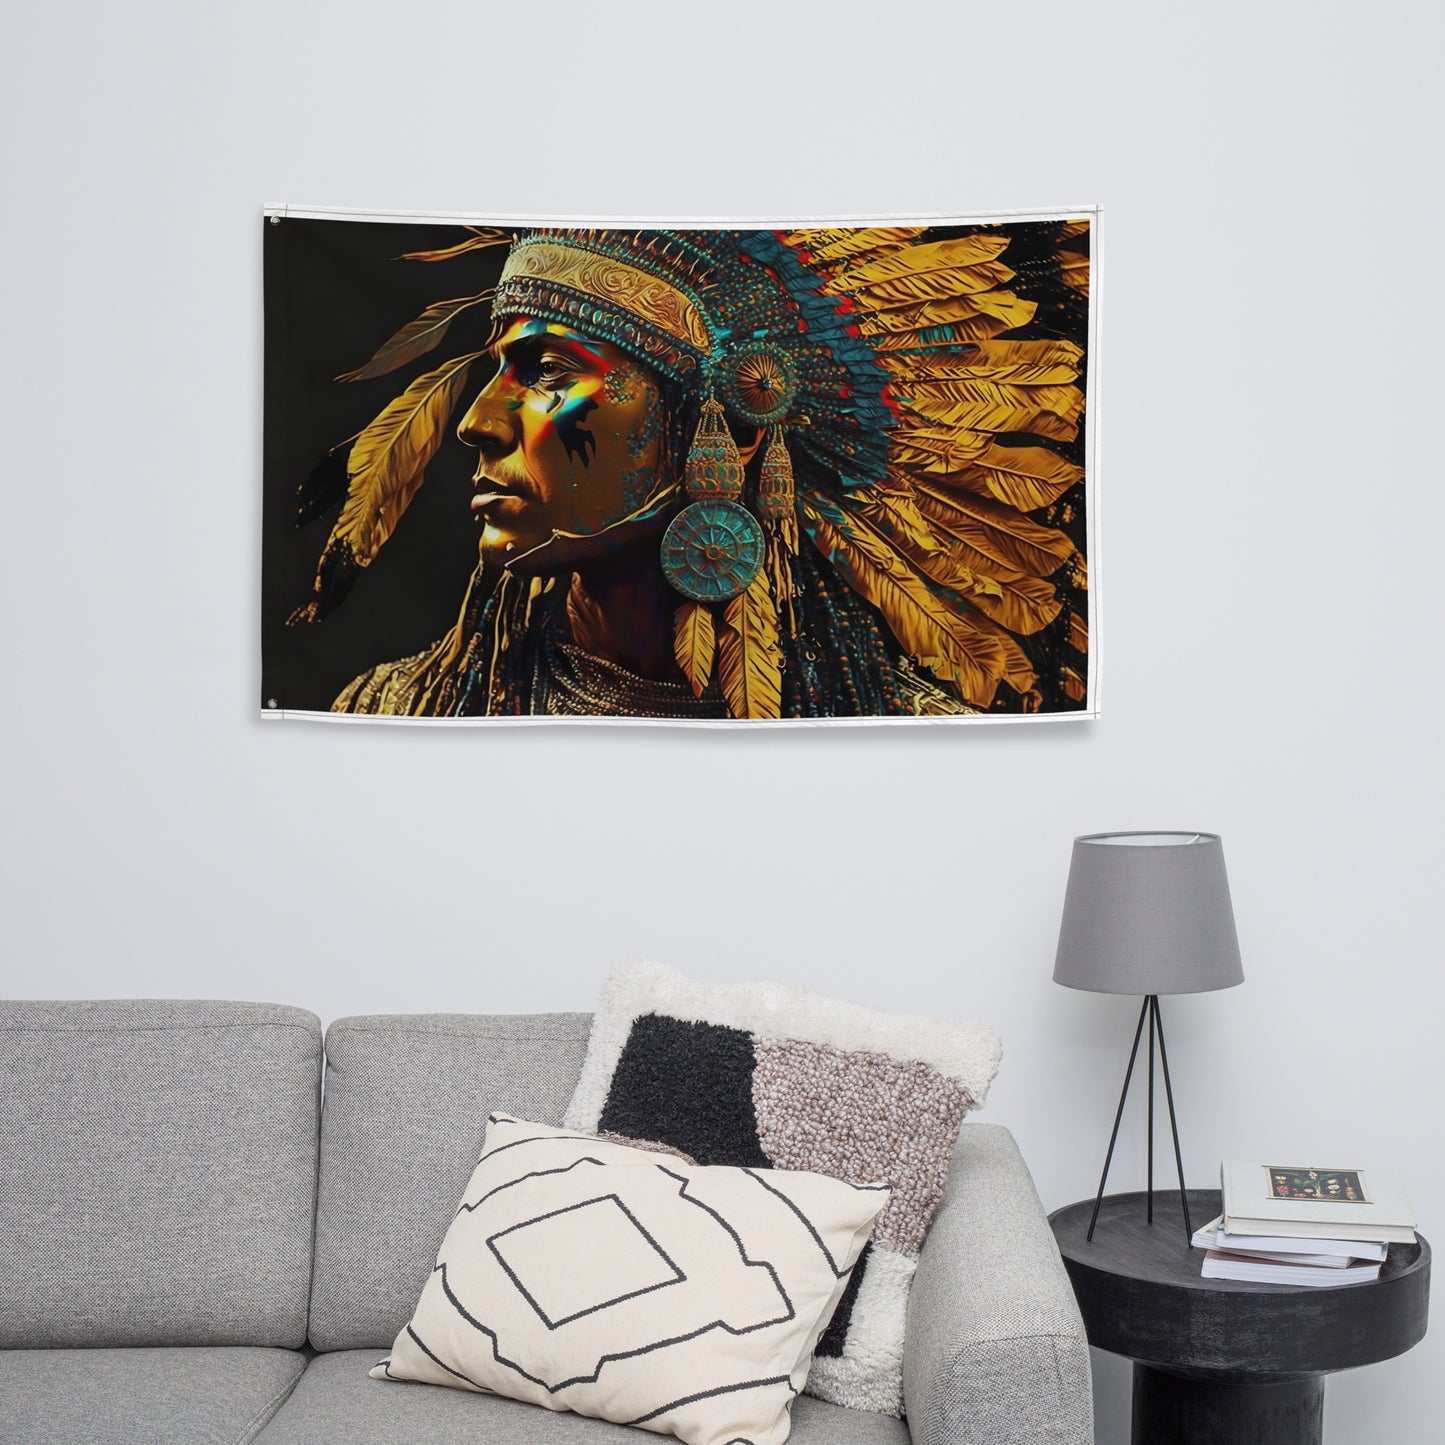 Lona Decorativa de Guerrero Apache